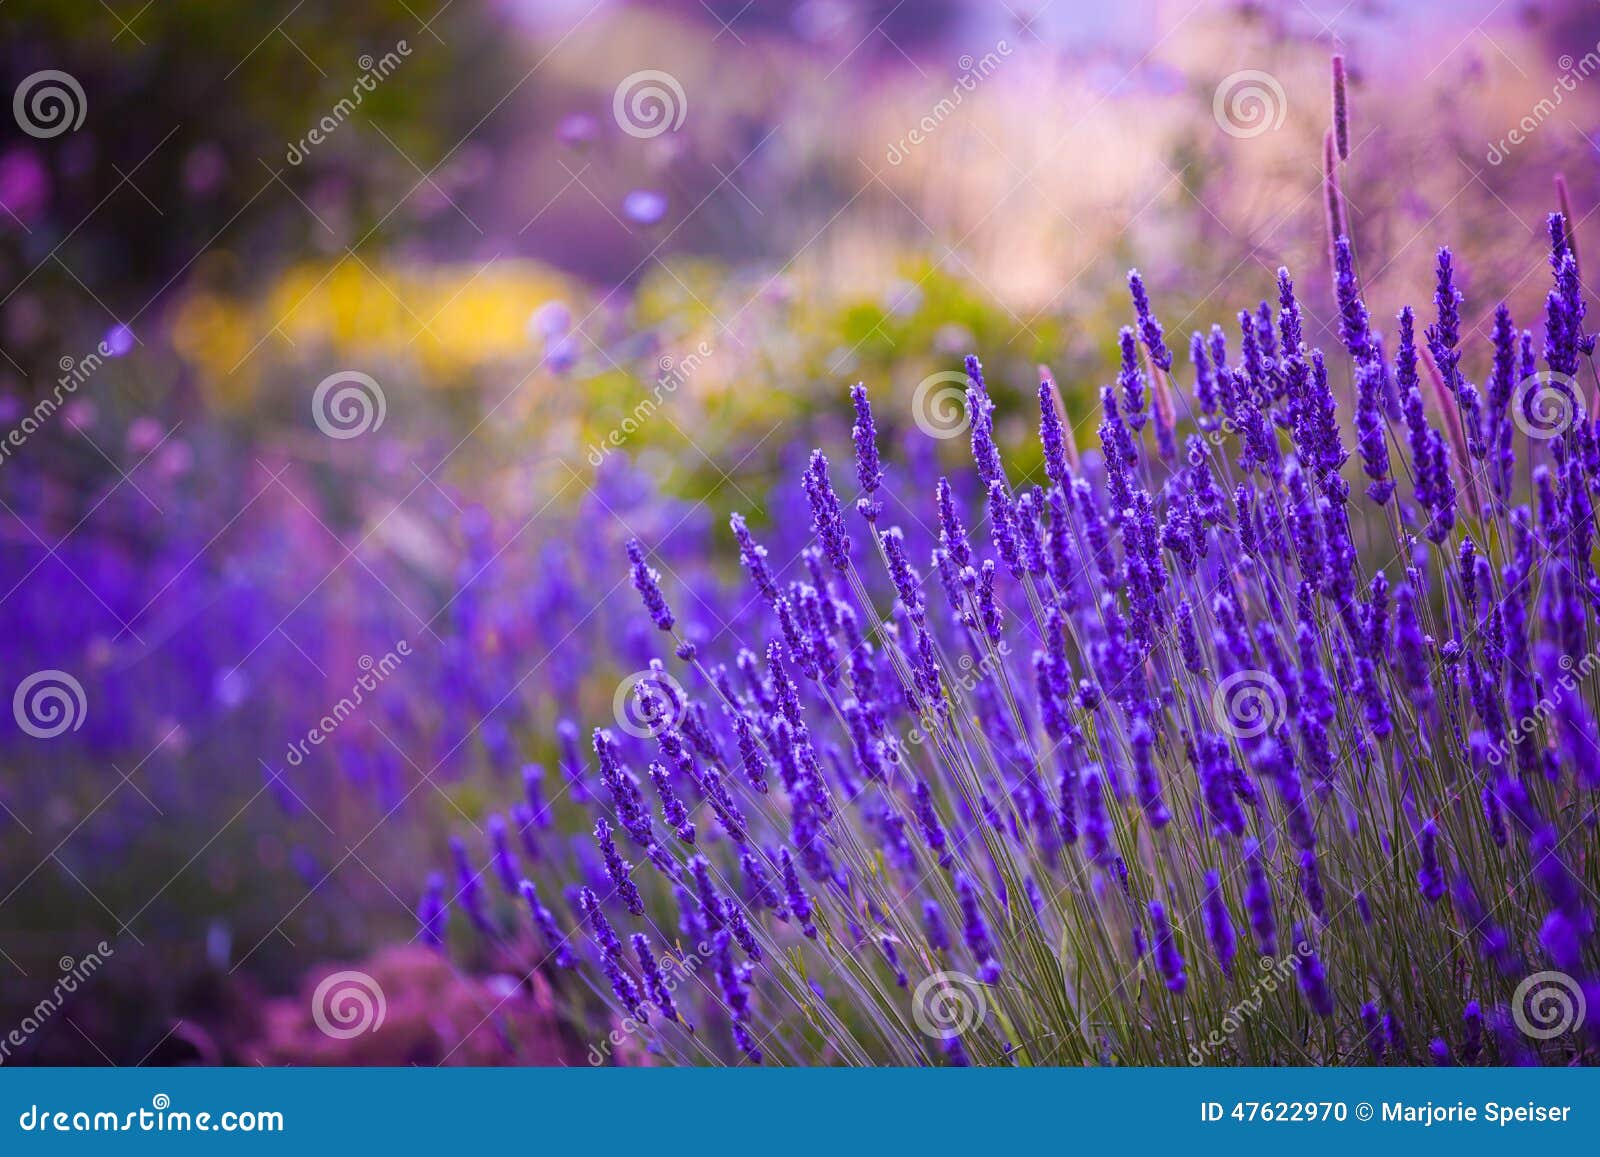 garden flowers lavendar colorful background